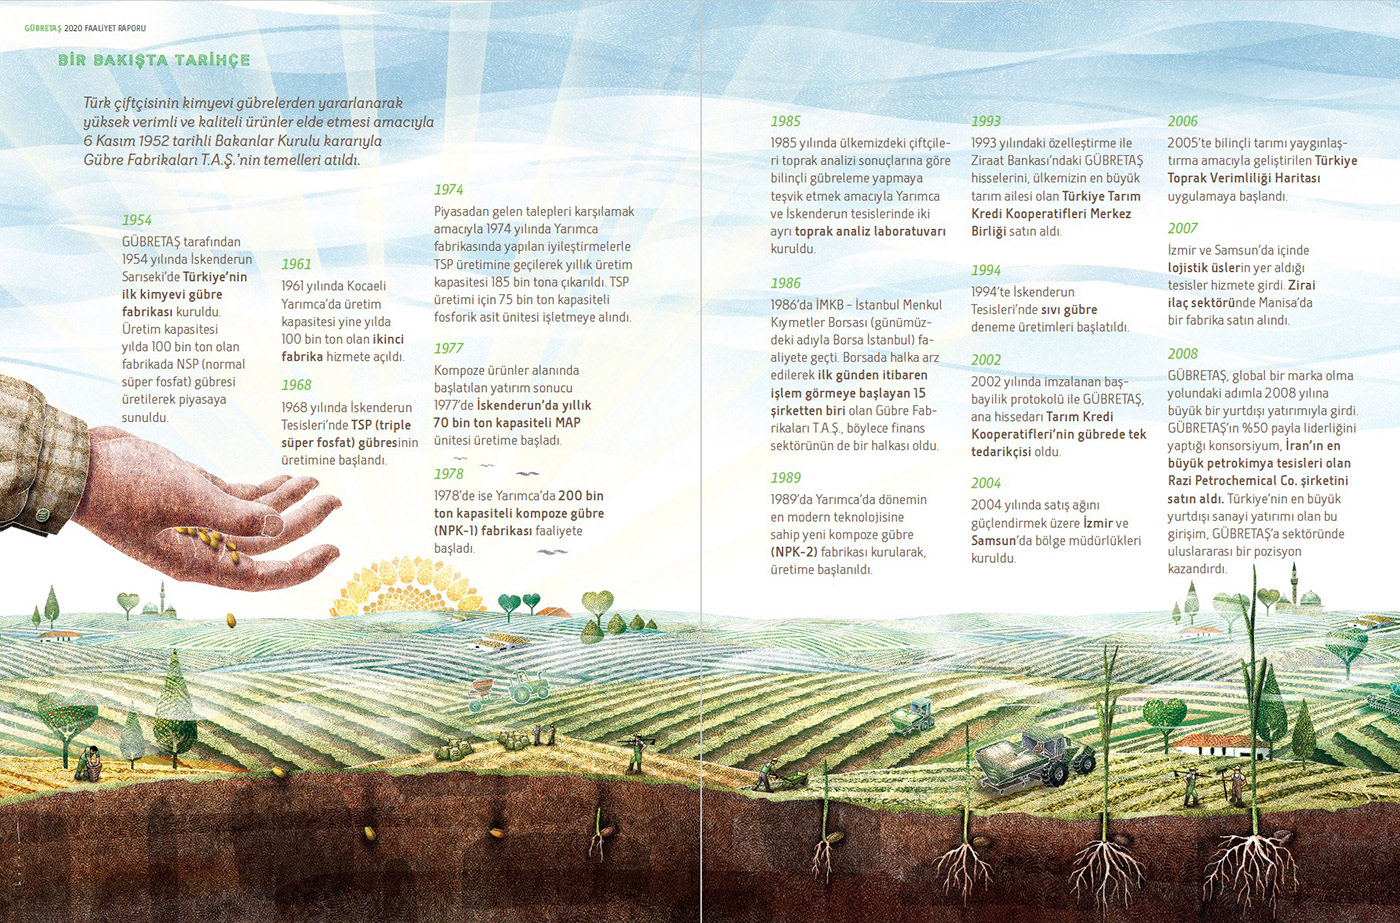 agriculture annual report crops farmer Fertilizer Gübretas Nature research seeds Turkey